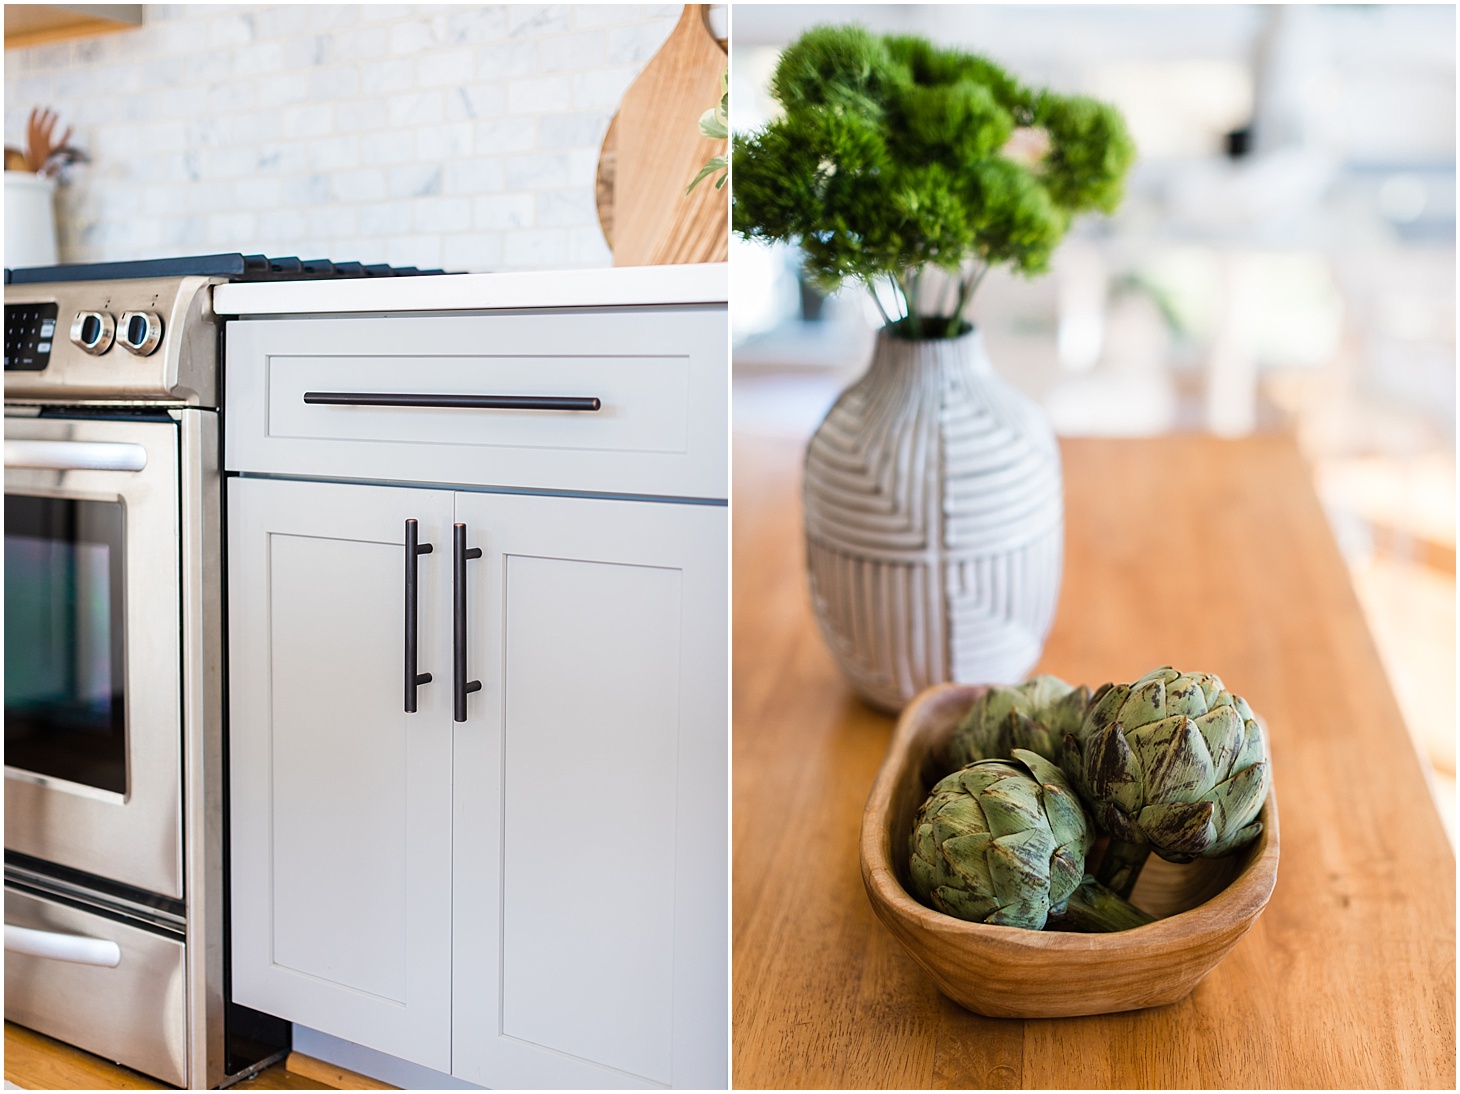 Modern Kitchen Inspiration | Home Tour | Curated Mid-Century Modern Home in Washington DC | Sarah Bradshaw Photography